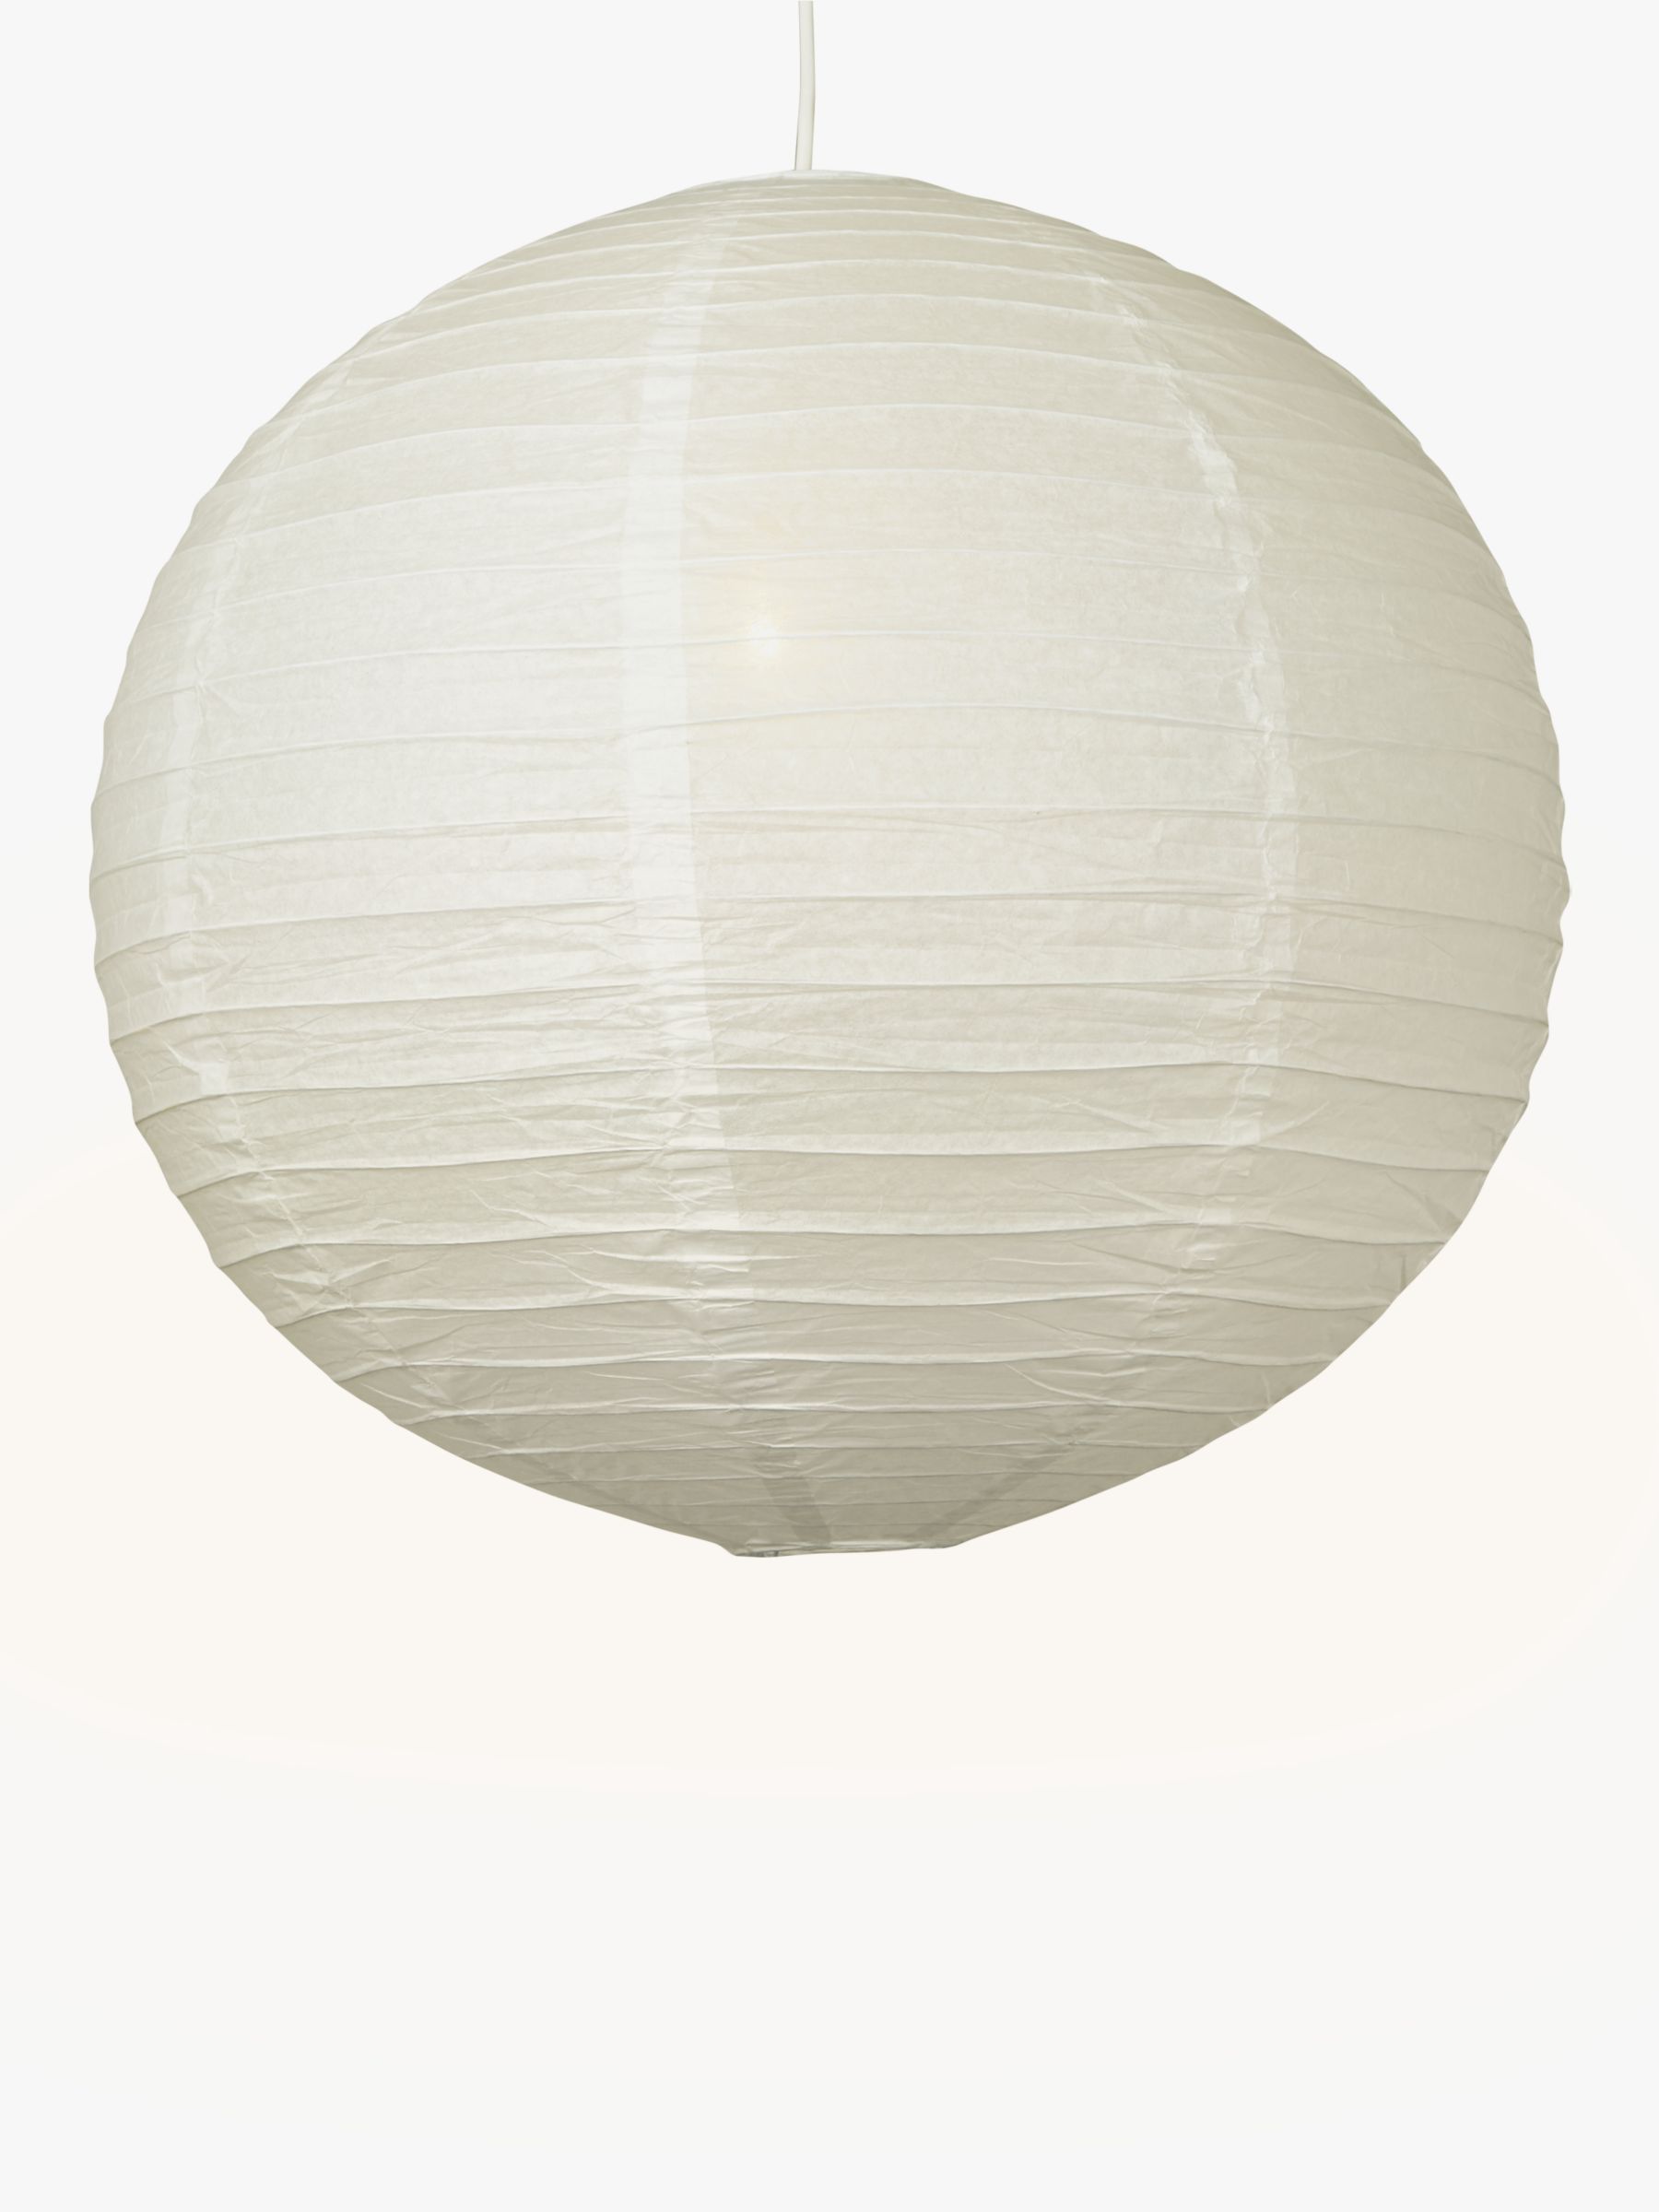 spherical paper lamp shades